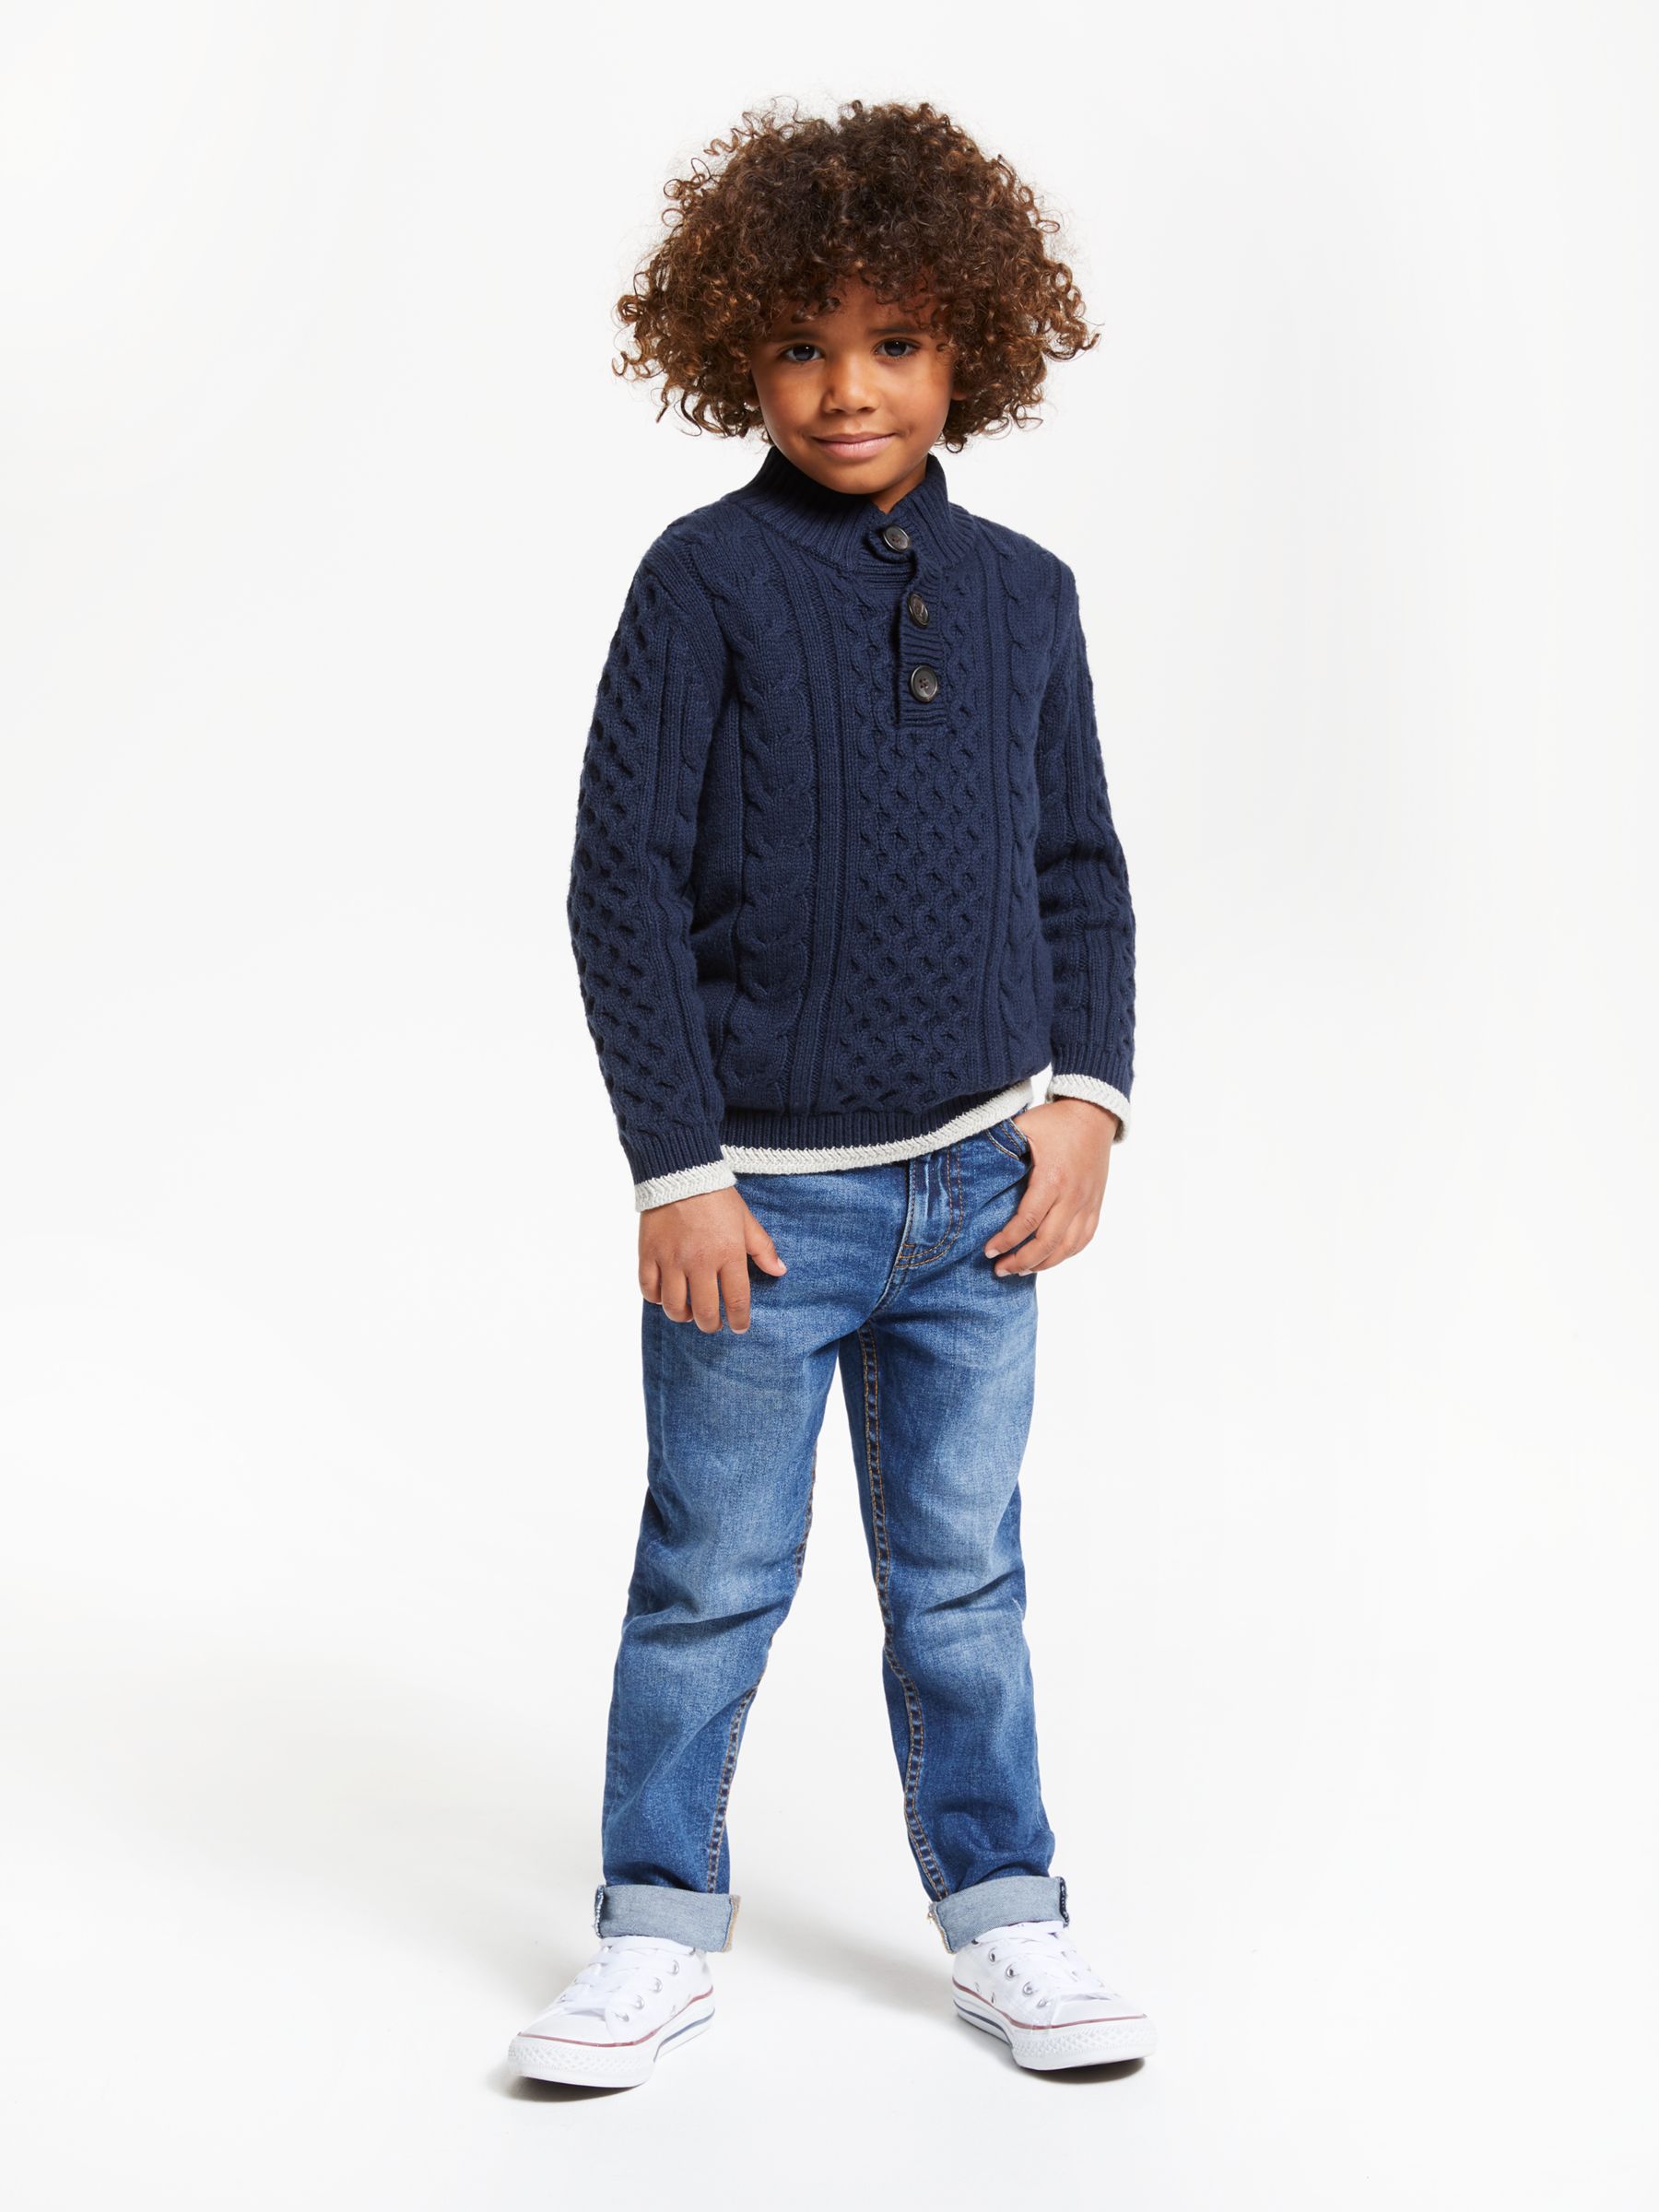 John Lewis & Partners Boys' Cable Button Knit Jumper, Blue